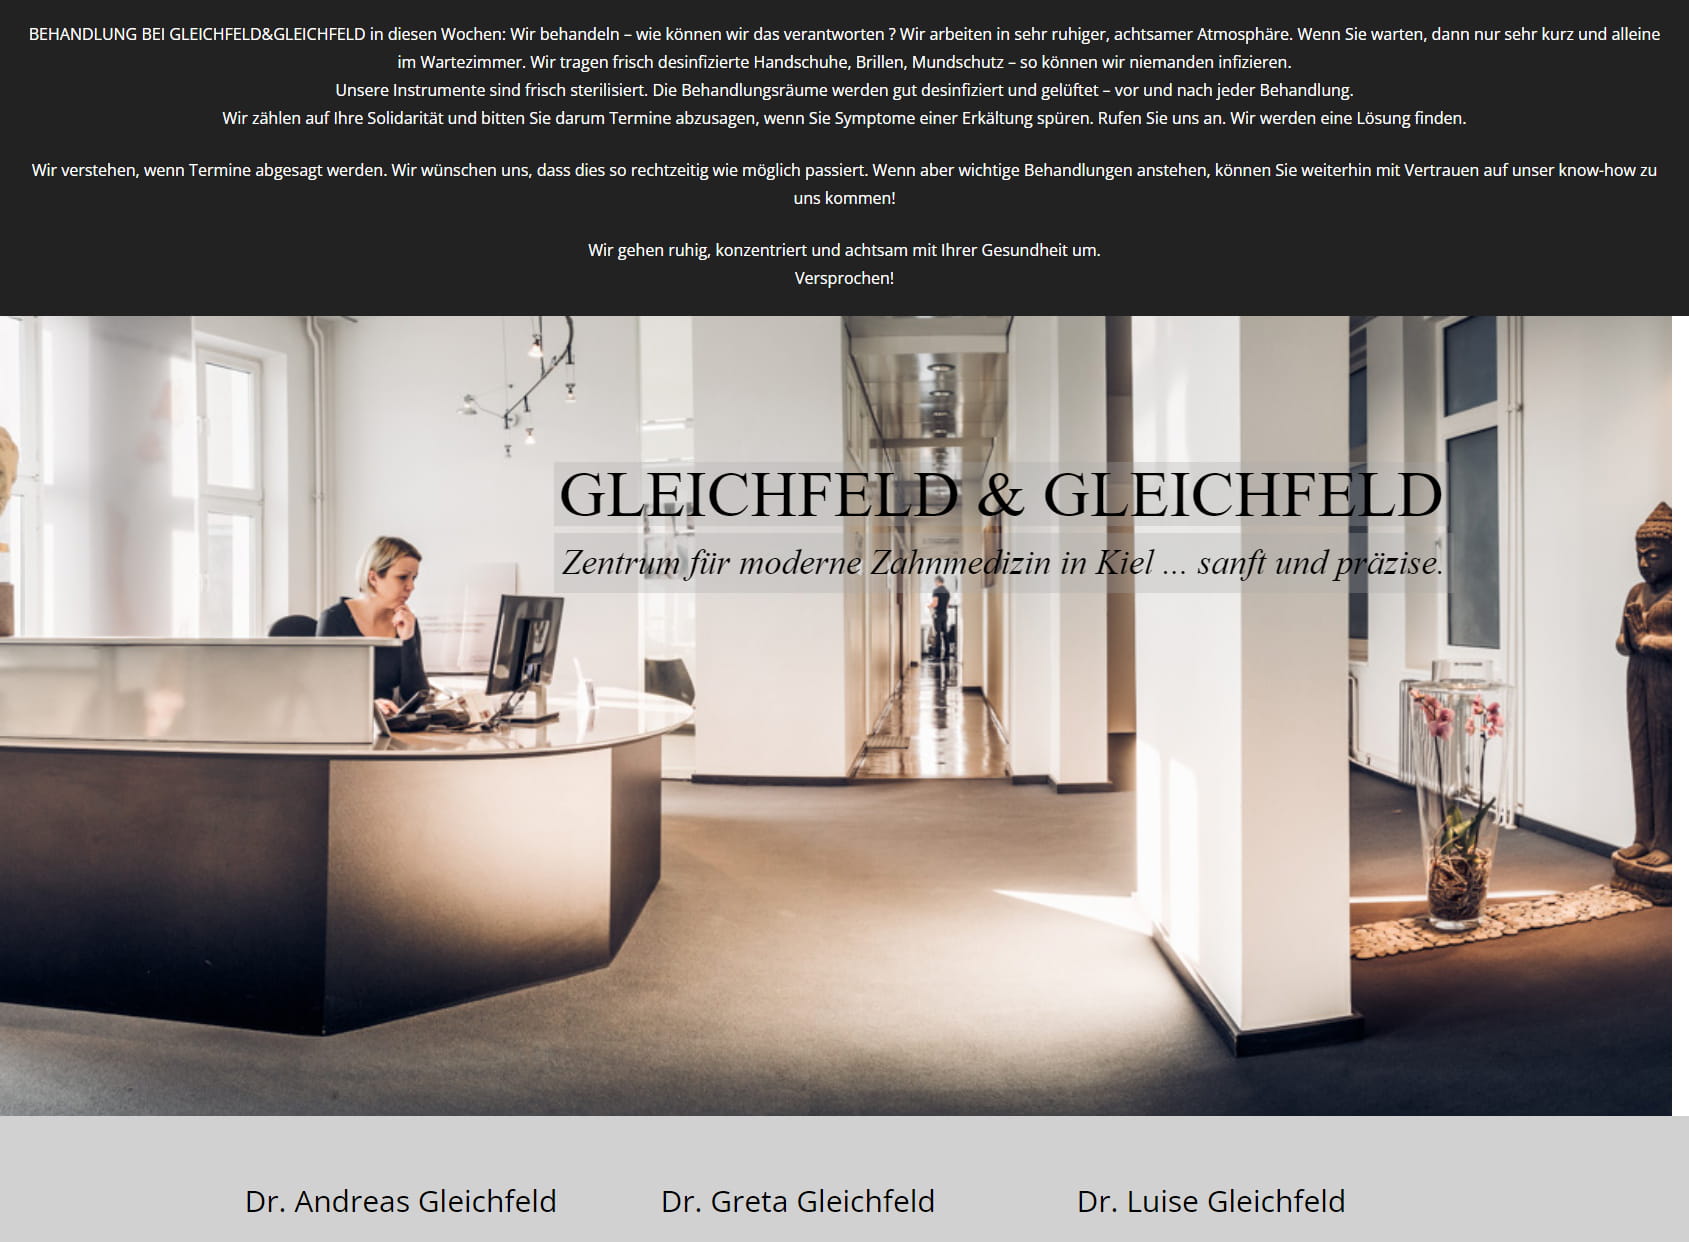 Gleichfeld & Gleichfeld